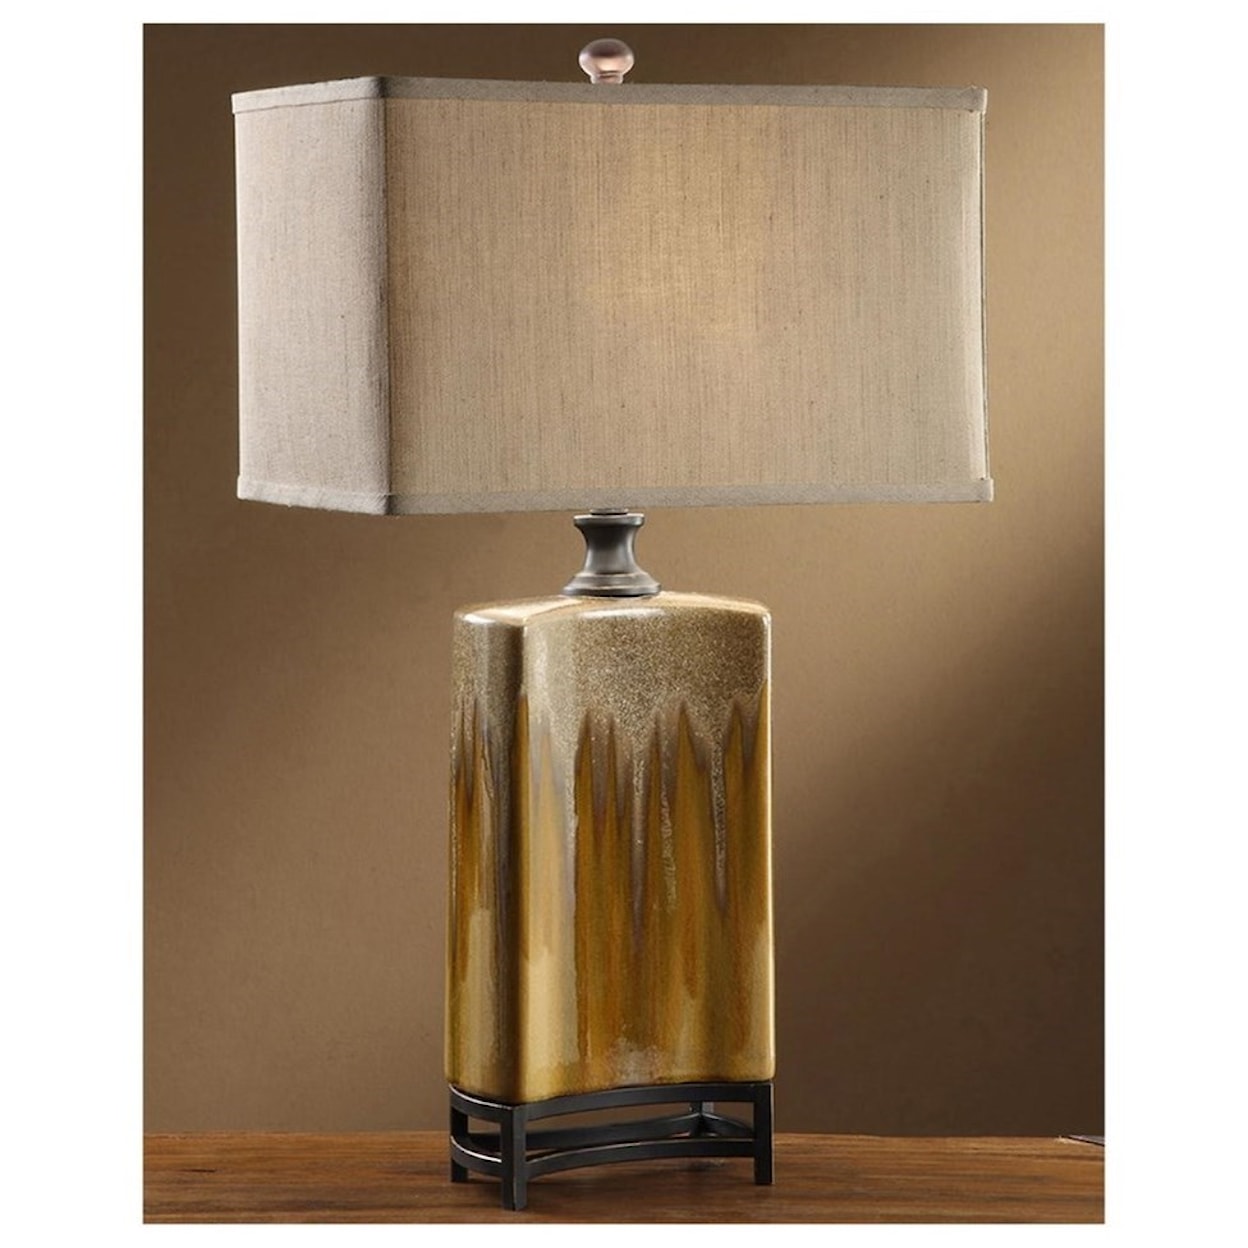 Crestview Collection Lighting Coaston Table Lamp